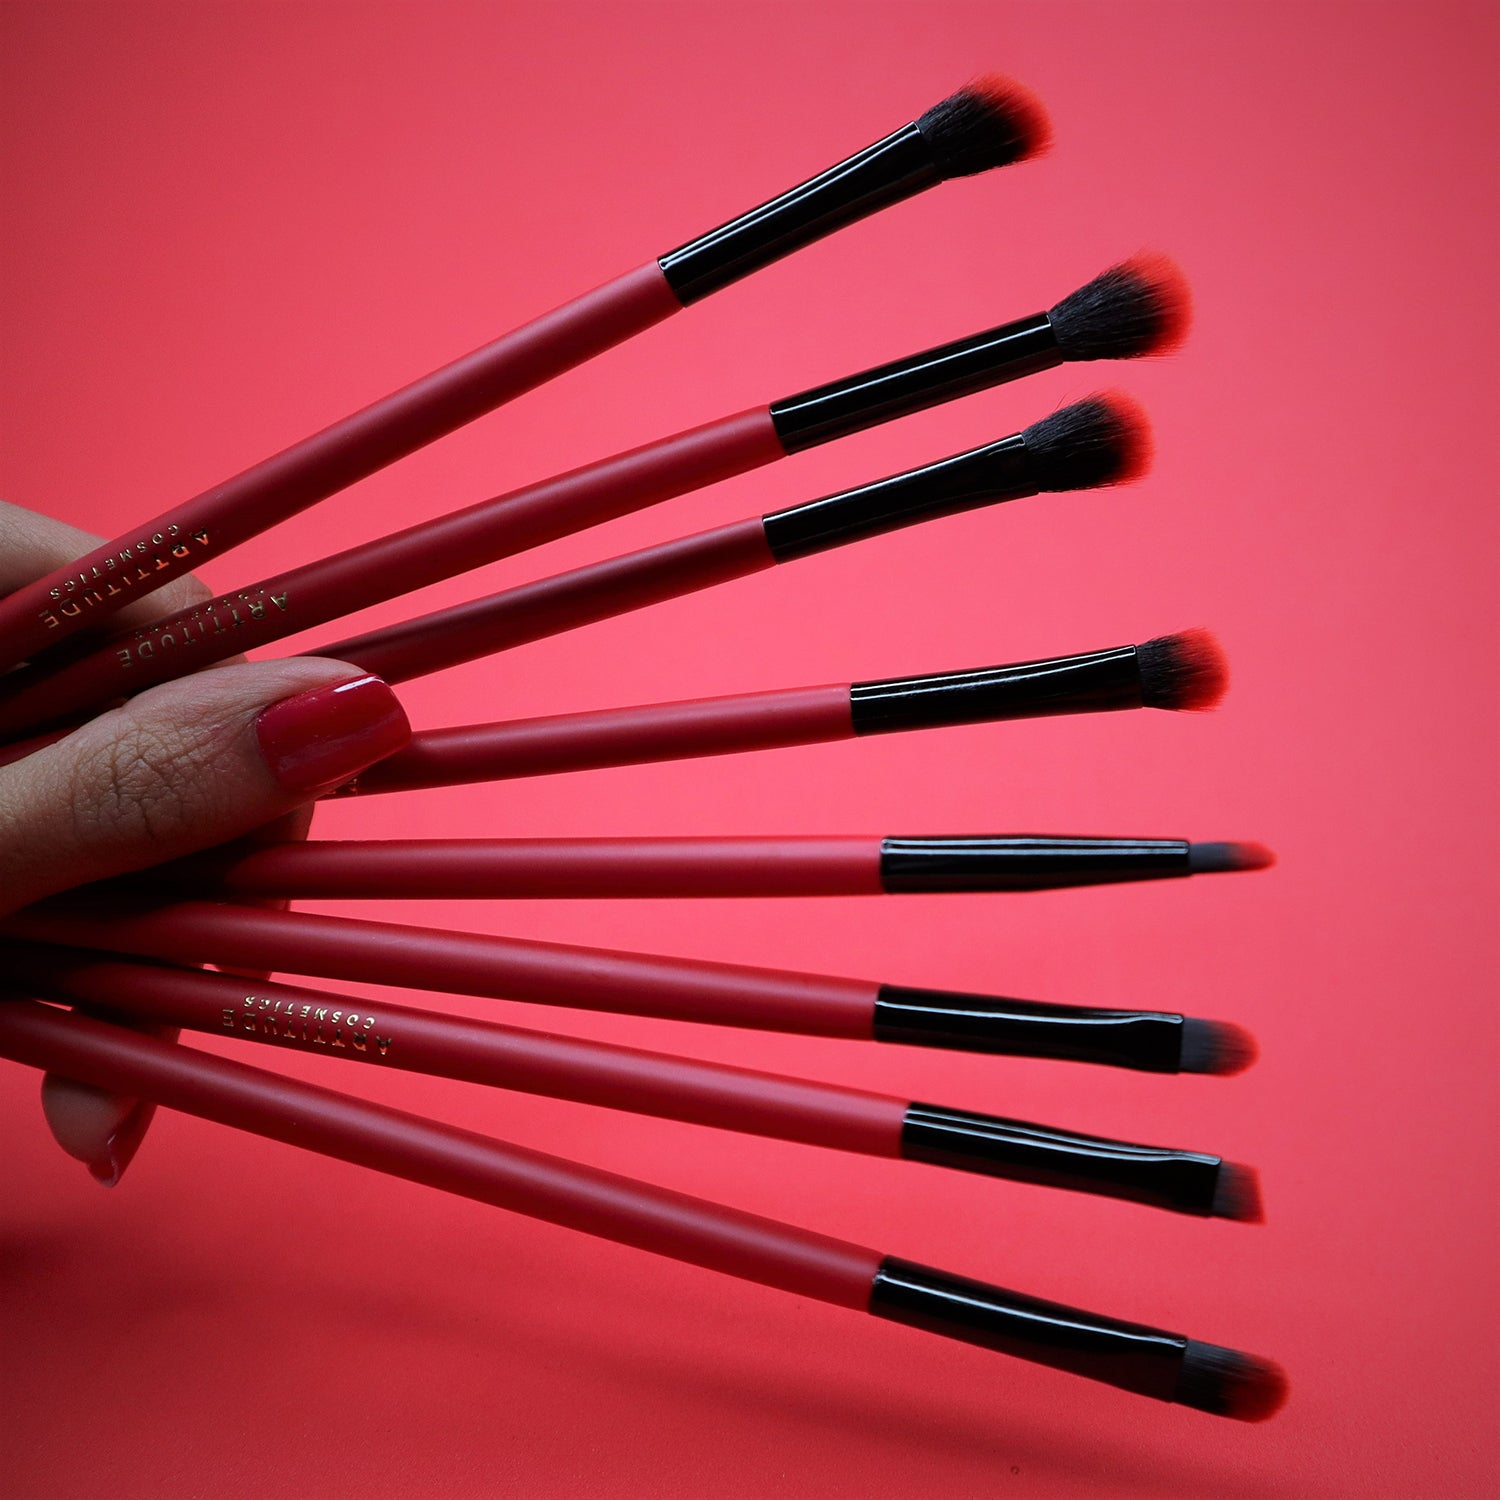 Red and Black Make-Up Brush Set - 8 Piece Eye Brushes